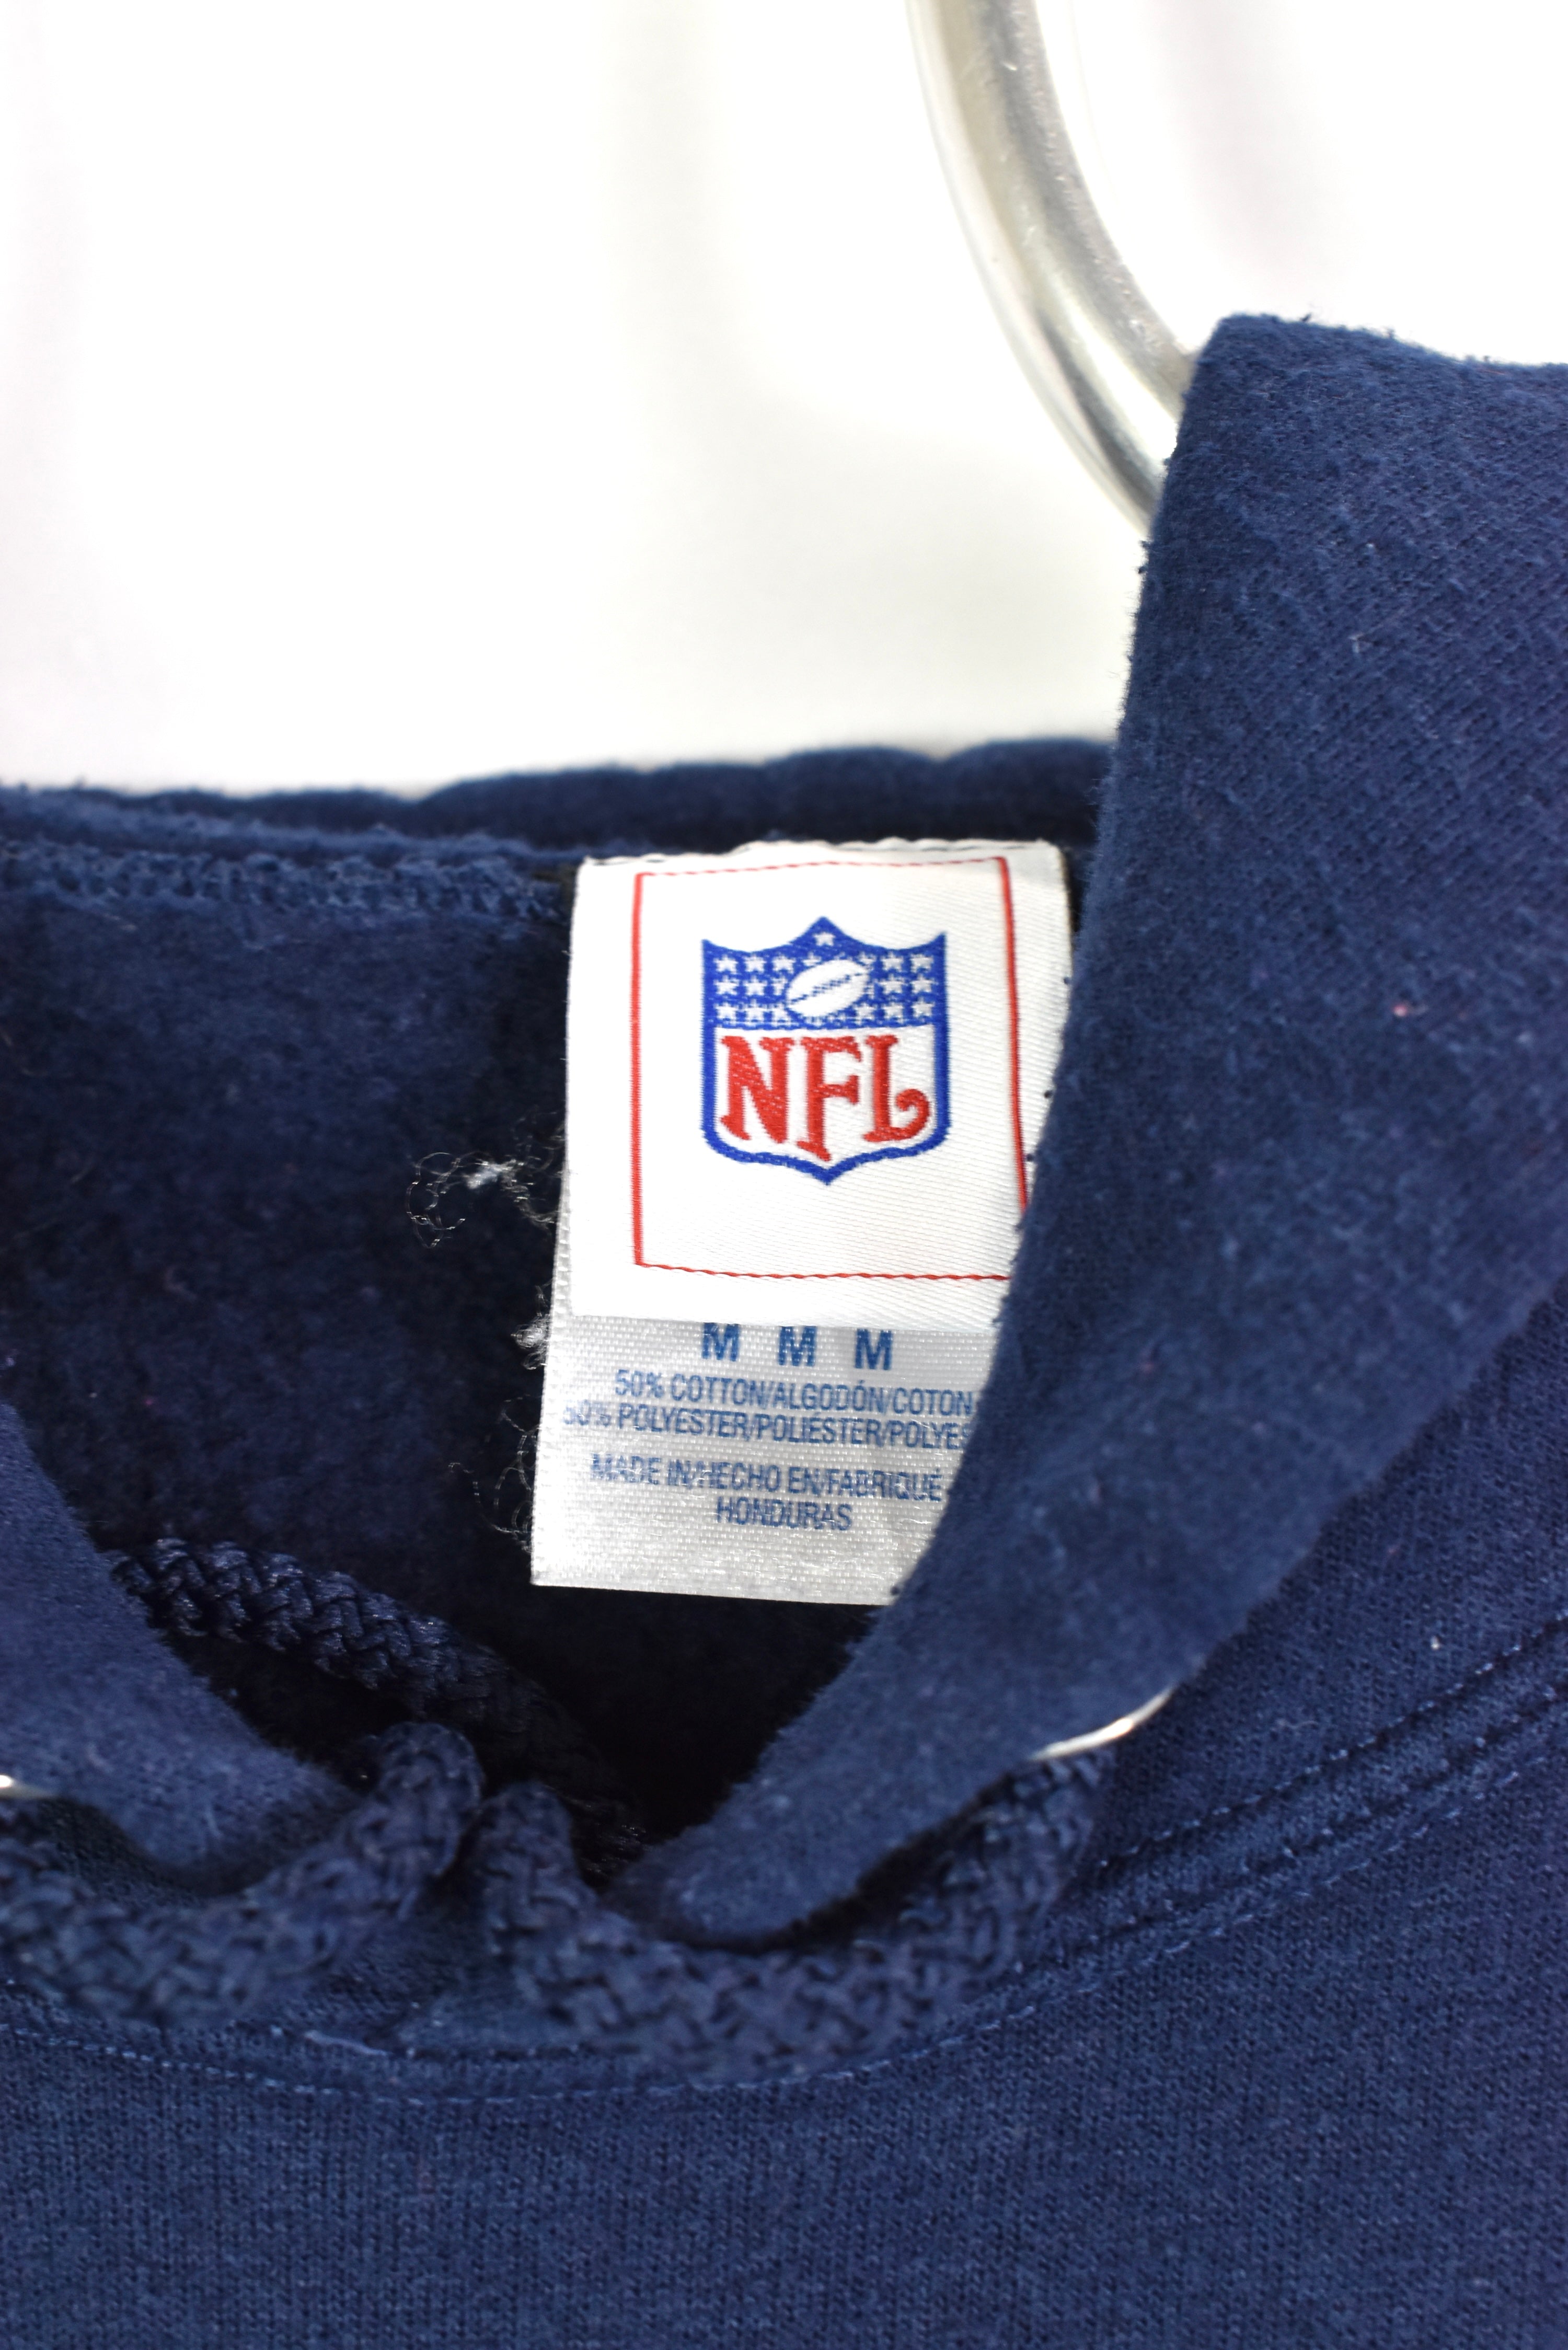 Vintage New England Patriots hoodie, NFL navy blue graphic sweatshirt - small PRO SPORT